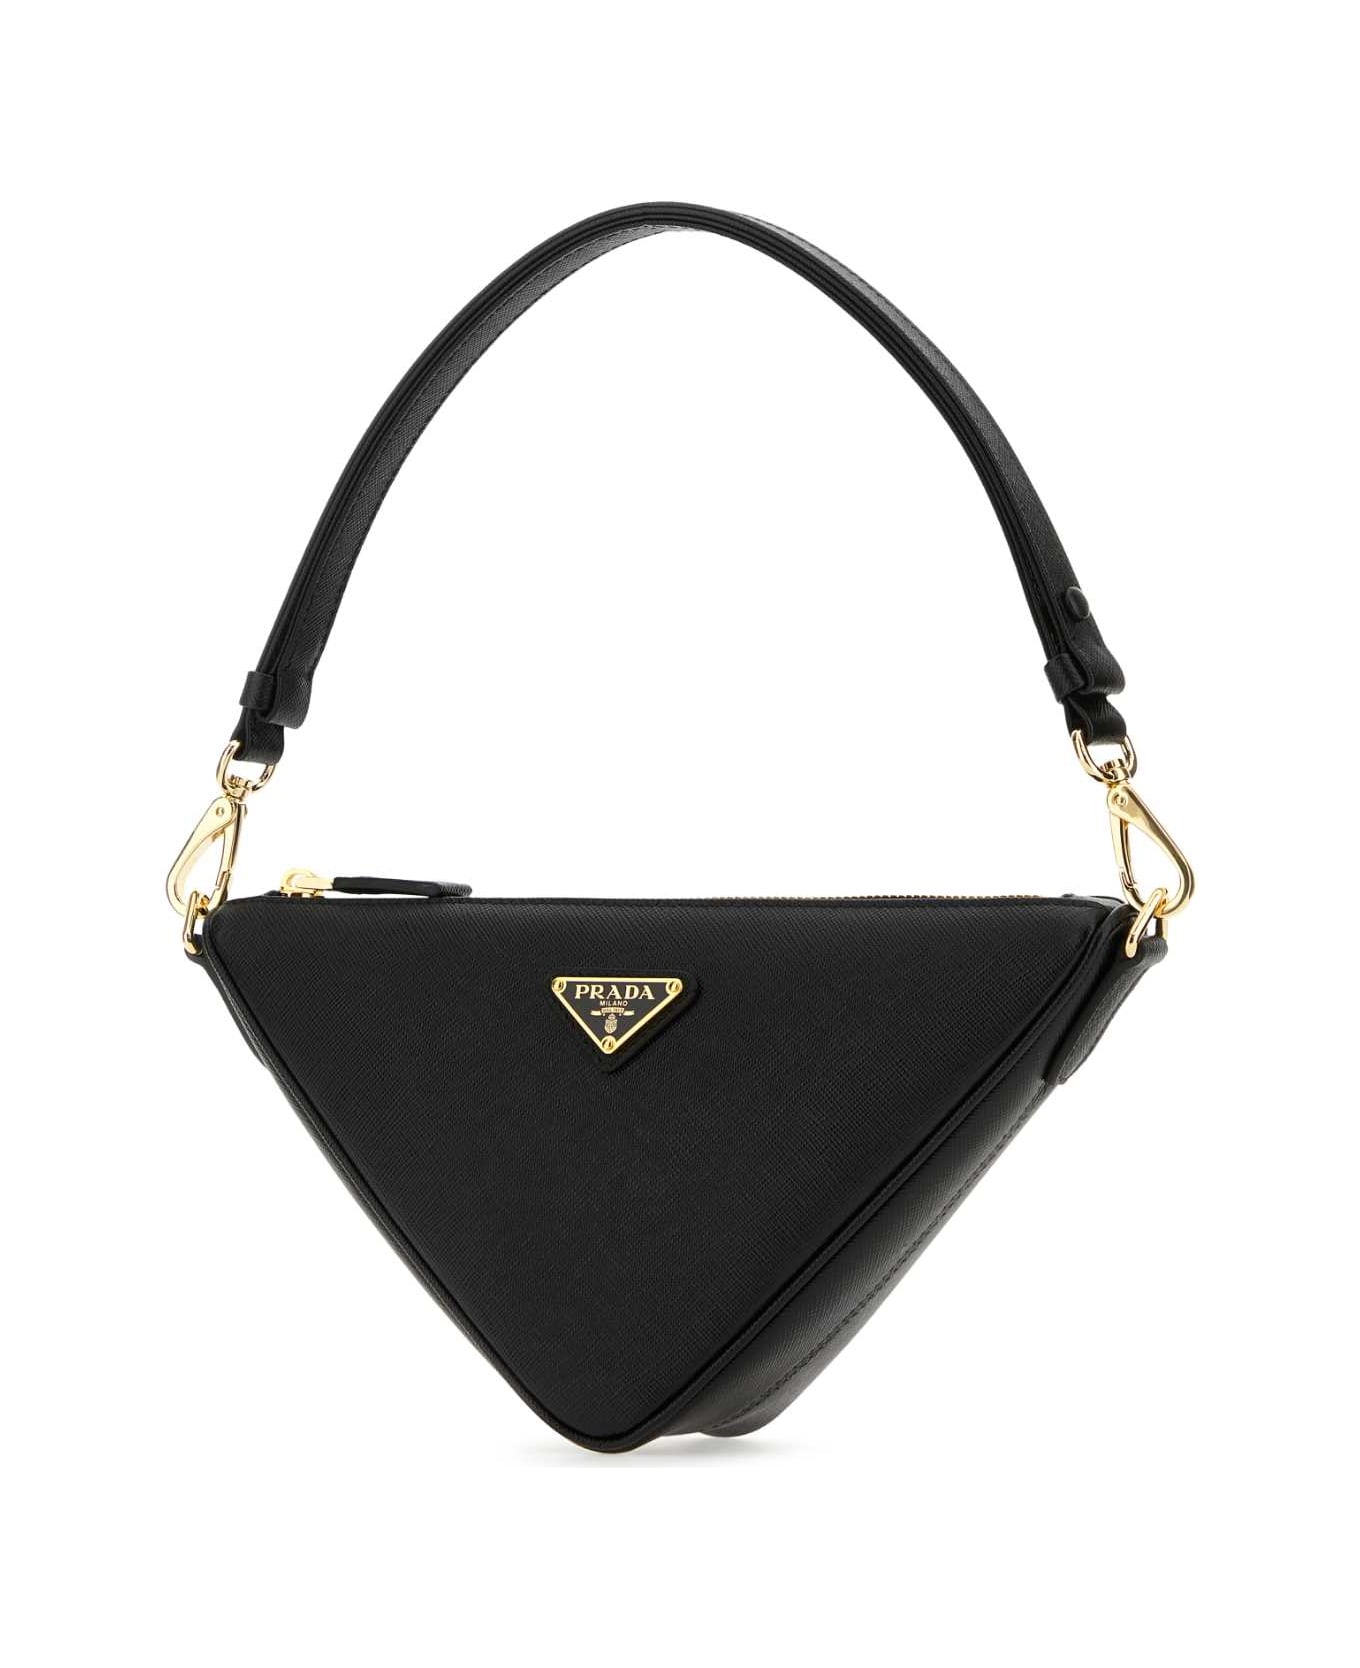 Prada Black Leather Prada Triangle Shoulder Bag - NERO